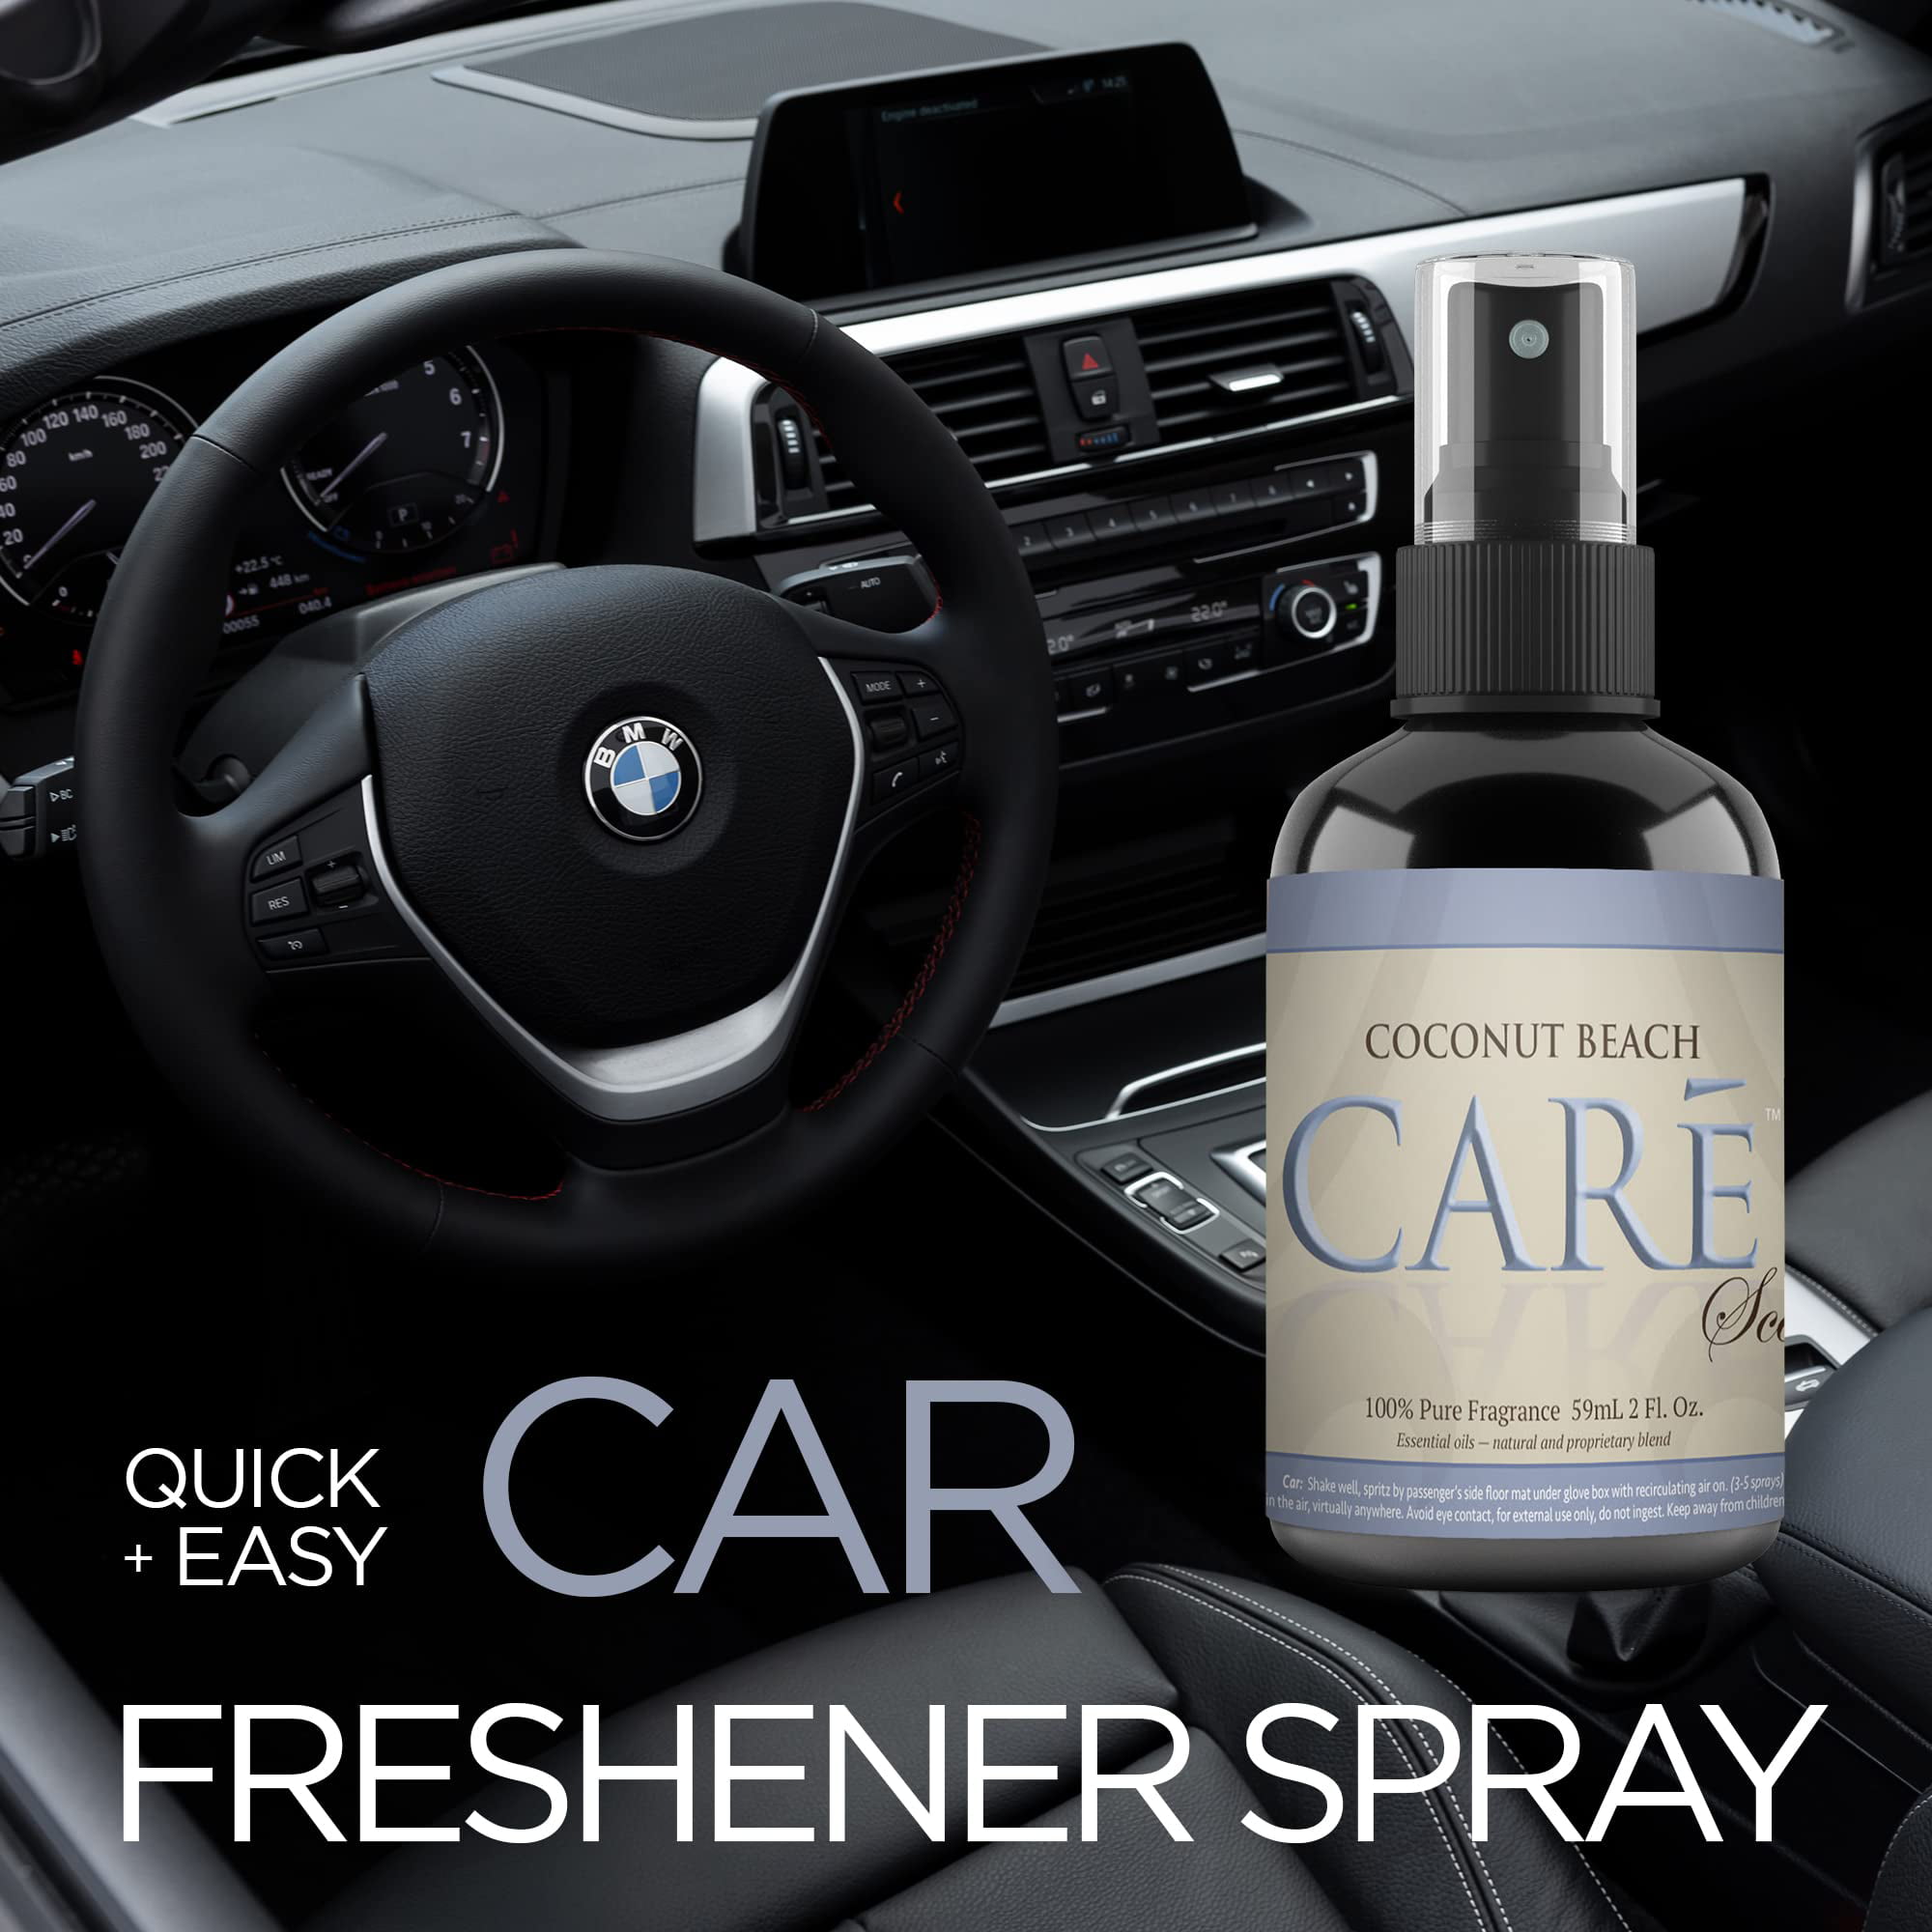 Mahogany Teakwood (2pk) Car Fresheners – Busywrld